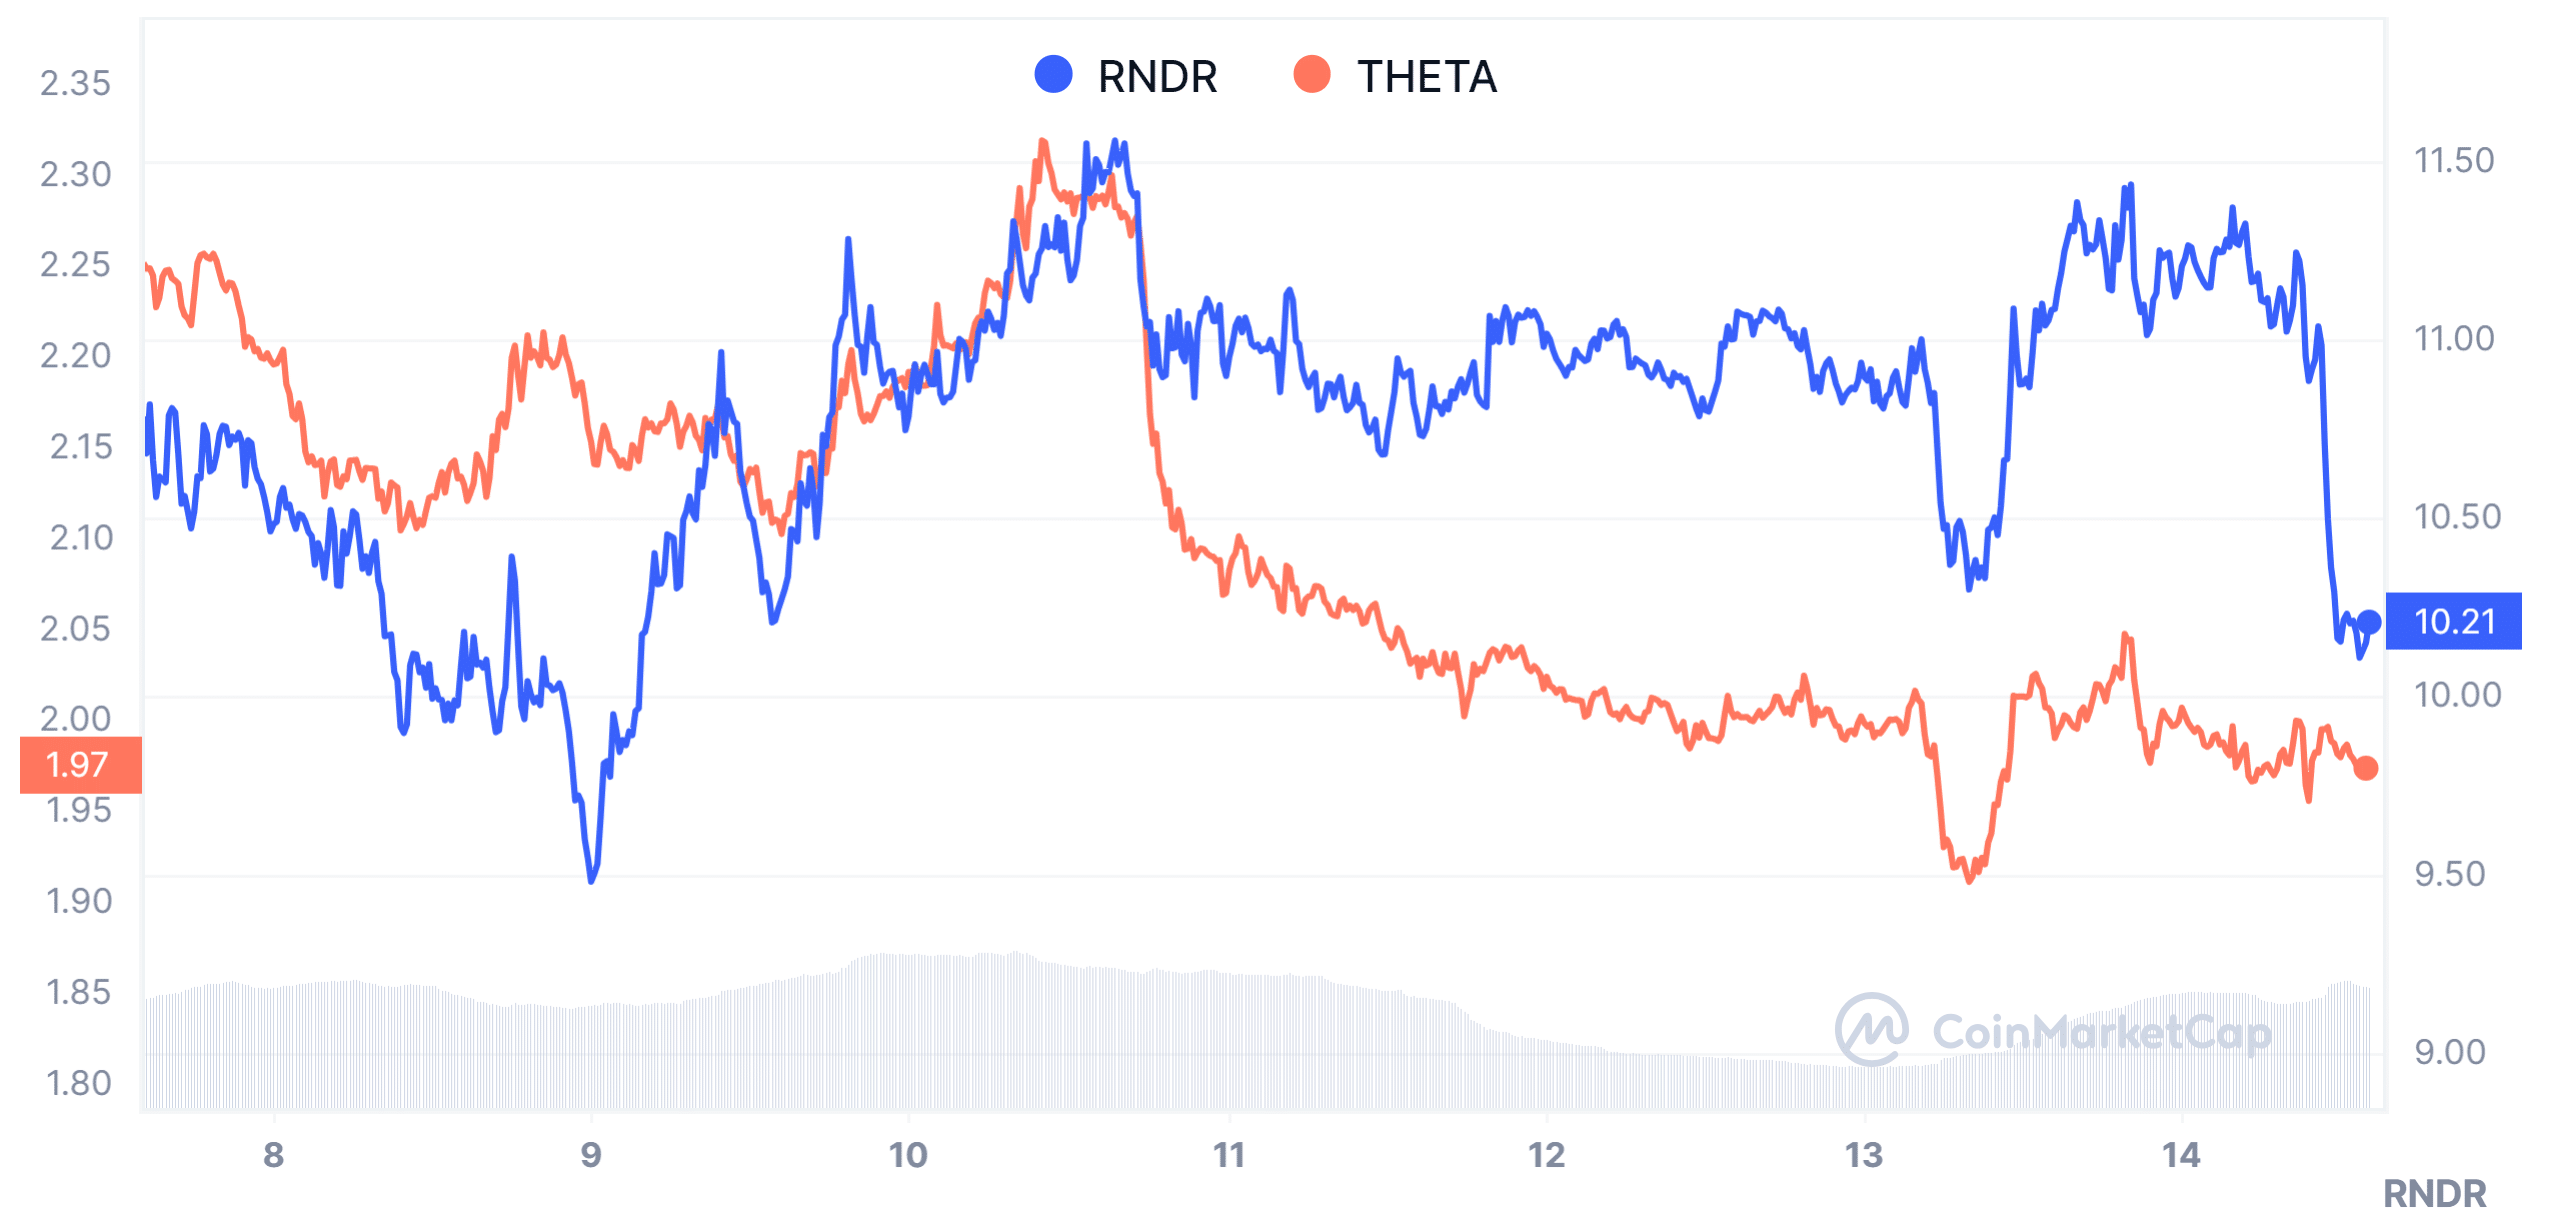 Rendering vs. Theta: Market Performance